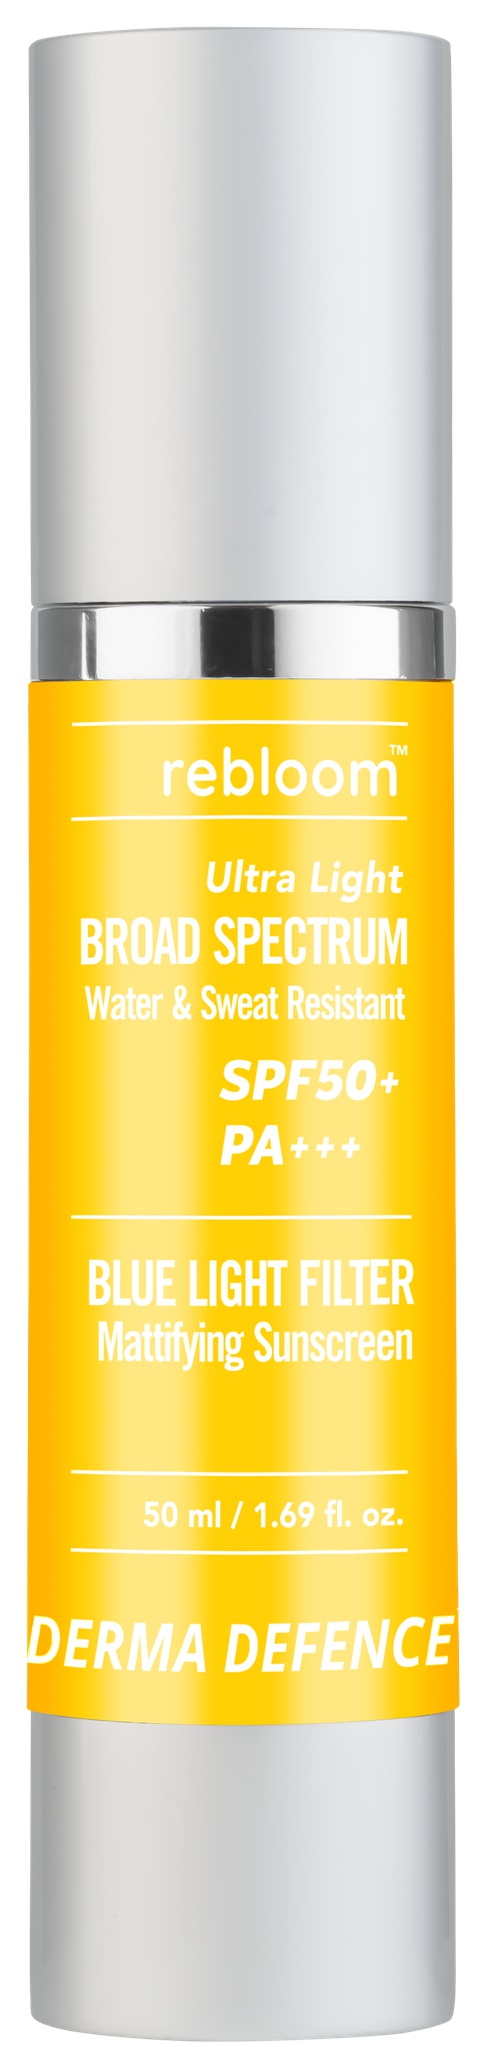 Rebloom Broad Spectrum Sunscreen SPF 50 PA+++ IR Blue Light